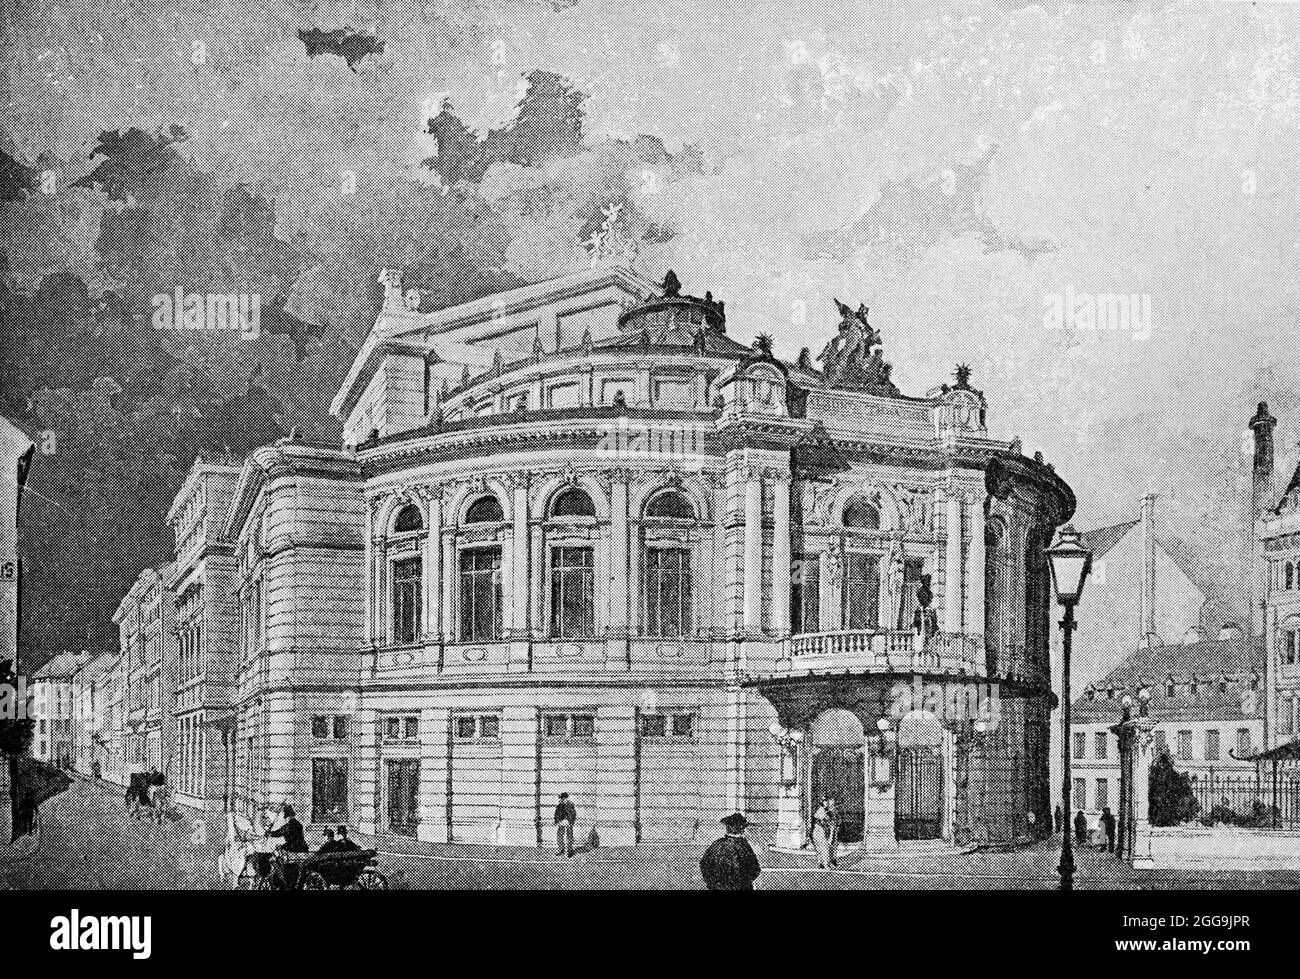 Das Raimund Theater or Raimund Theatre named after the dramatist Ferdinand Raimung, Vienna, Austria, Europe, historic Illustration 1897 Stock Photo